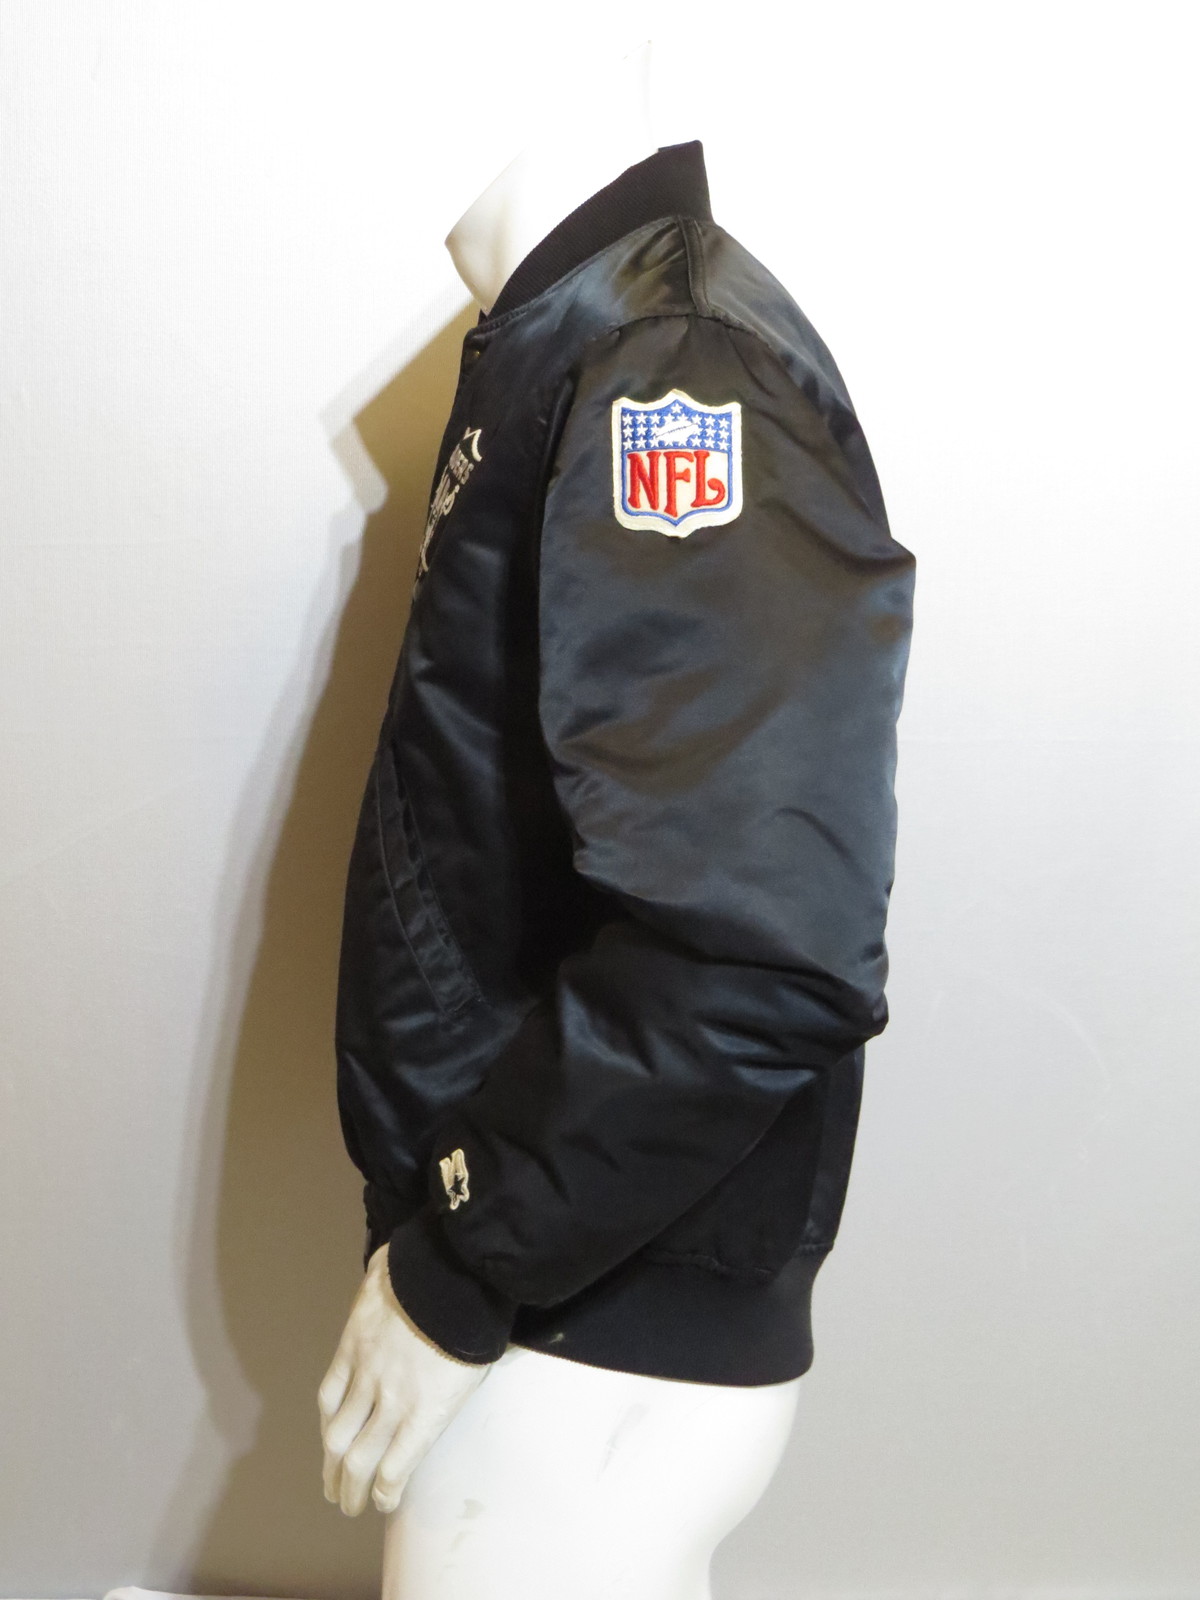 Starter Los Angeles Raiders NFL Vintage 90s Jacket Size L -  Hong Kong